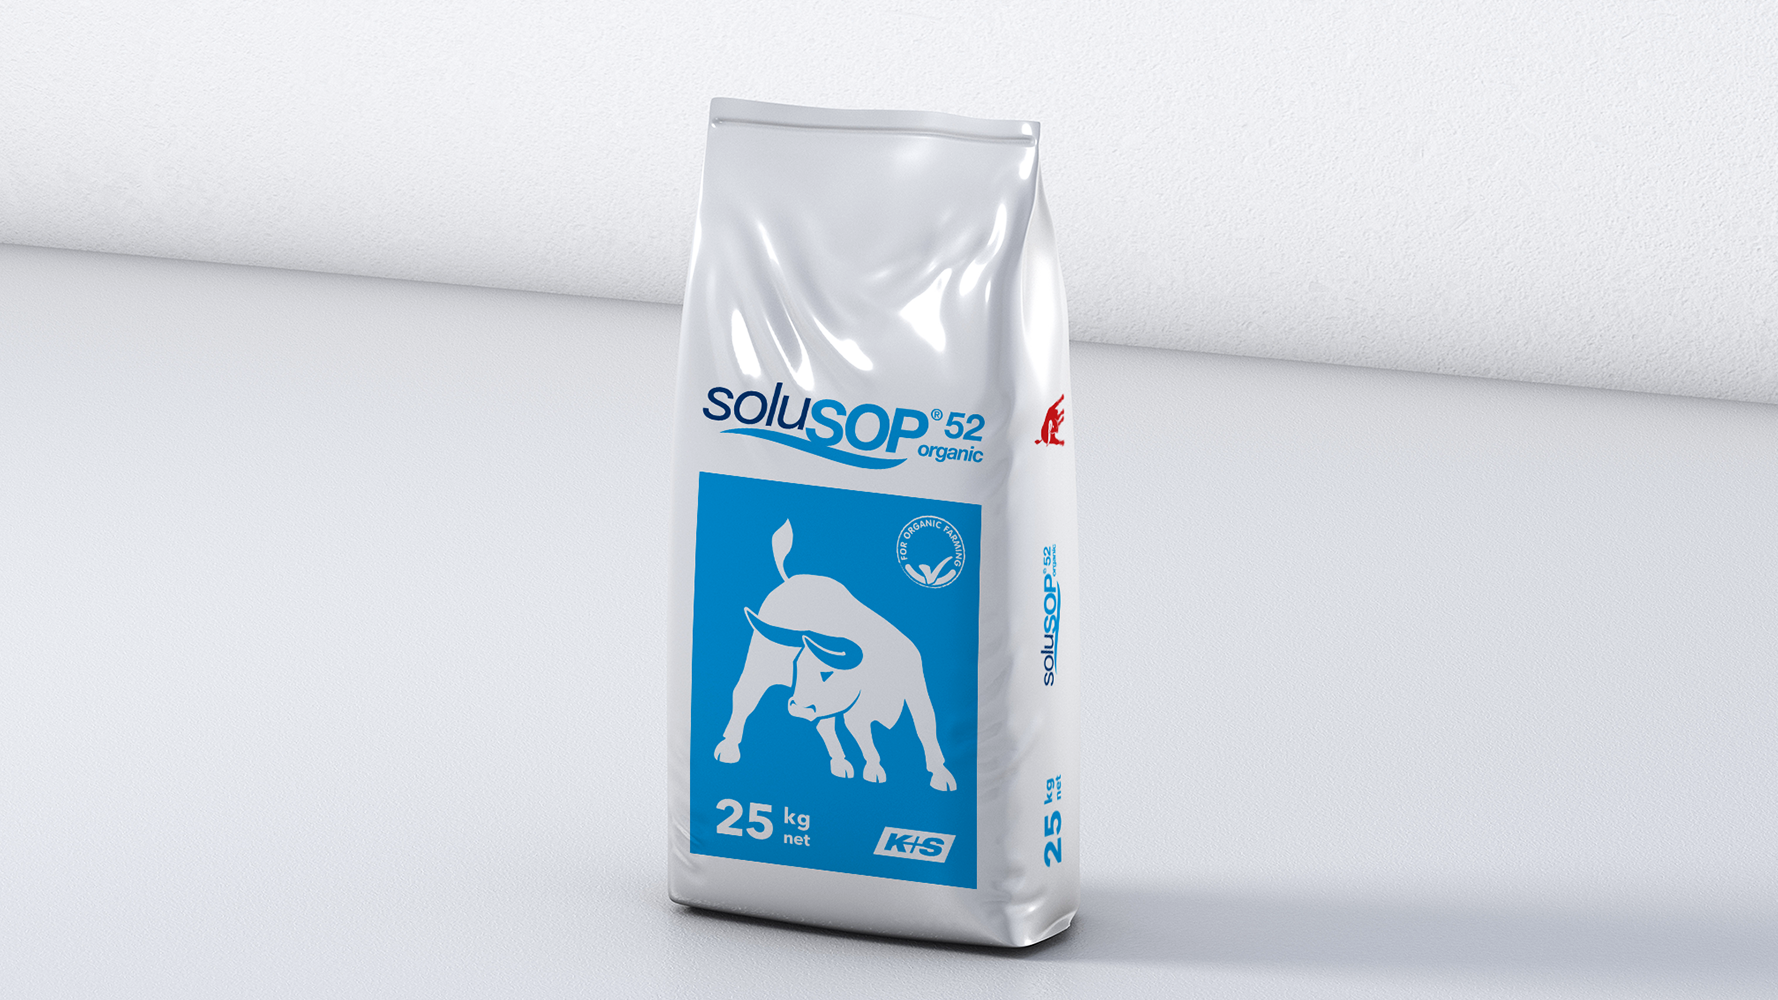 Fertigation soluSOP 52 organic bag